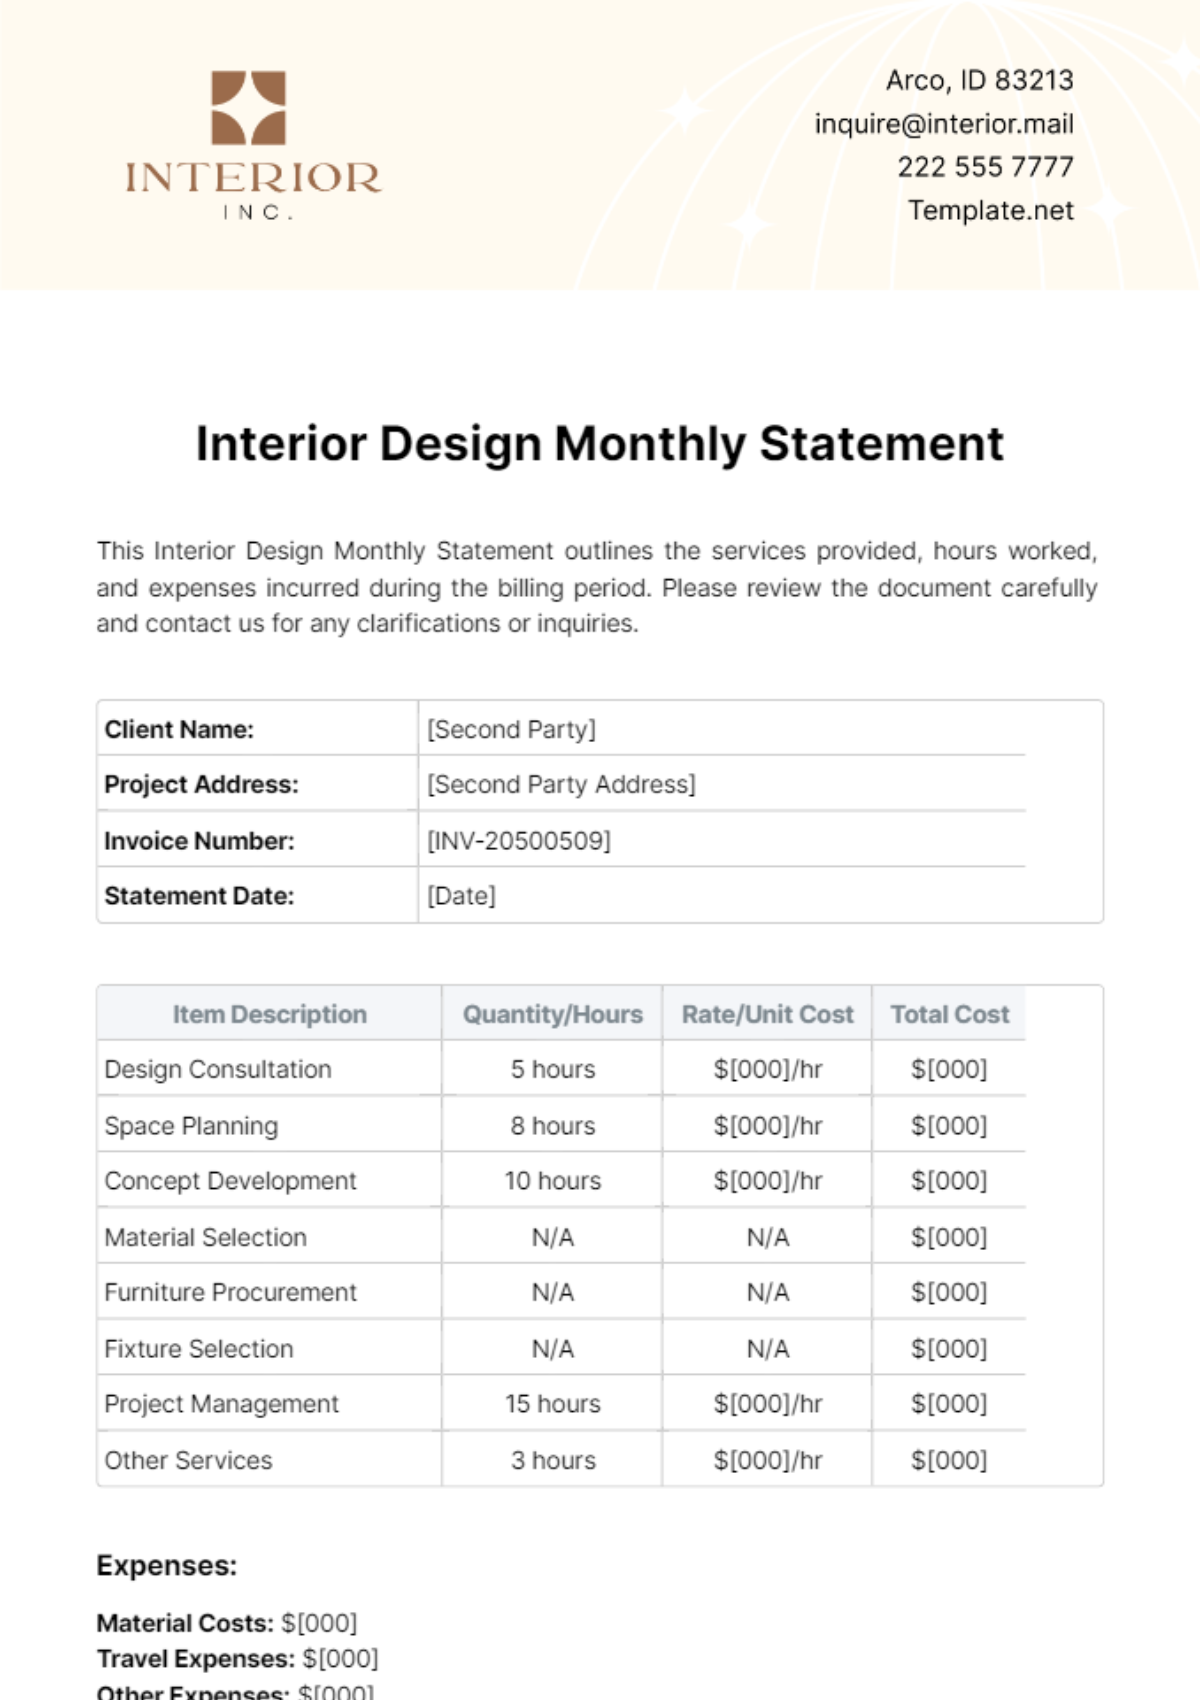 Interior Design Monthly Statement Template